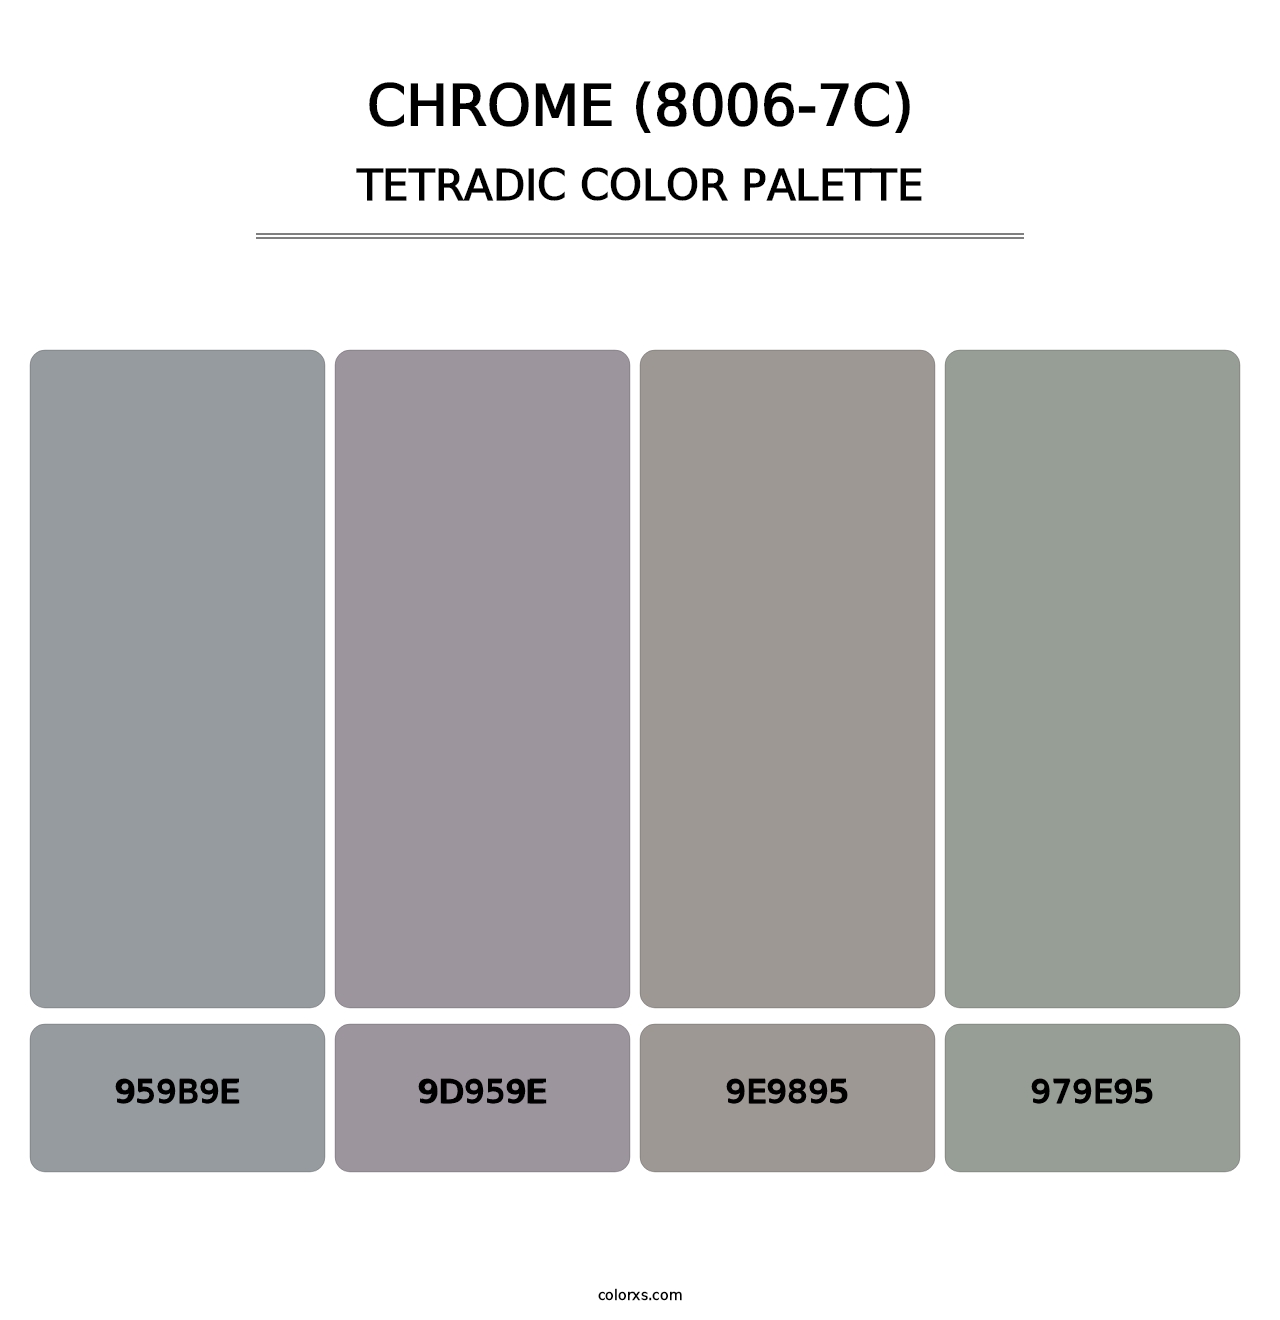 Chrome (8006-7C) - Tetradic Color Palette